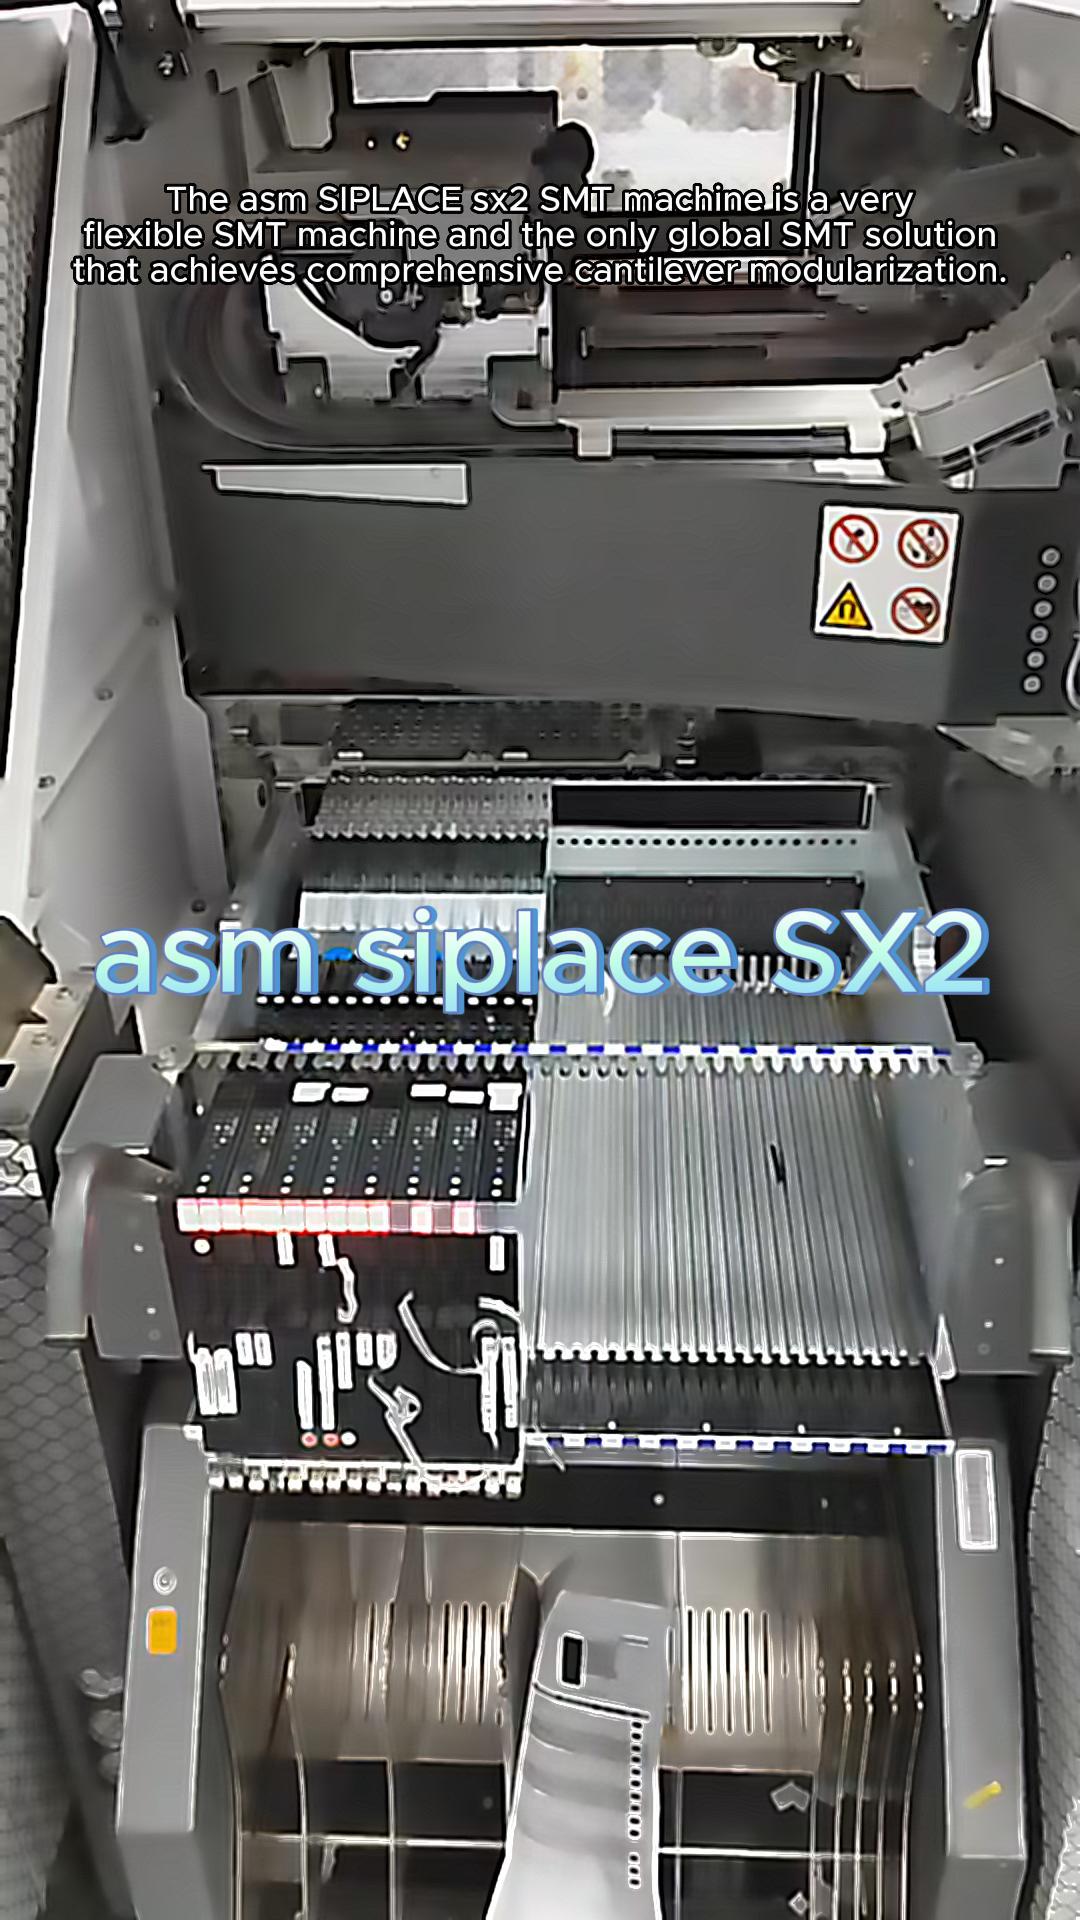 smt high speed asmpt siemens mounter placement machine asm siplace x2s equipment characteristics